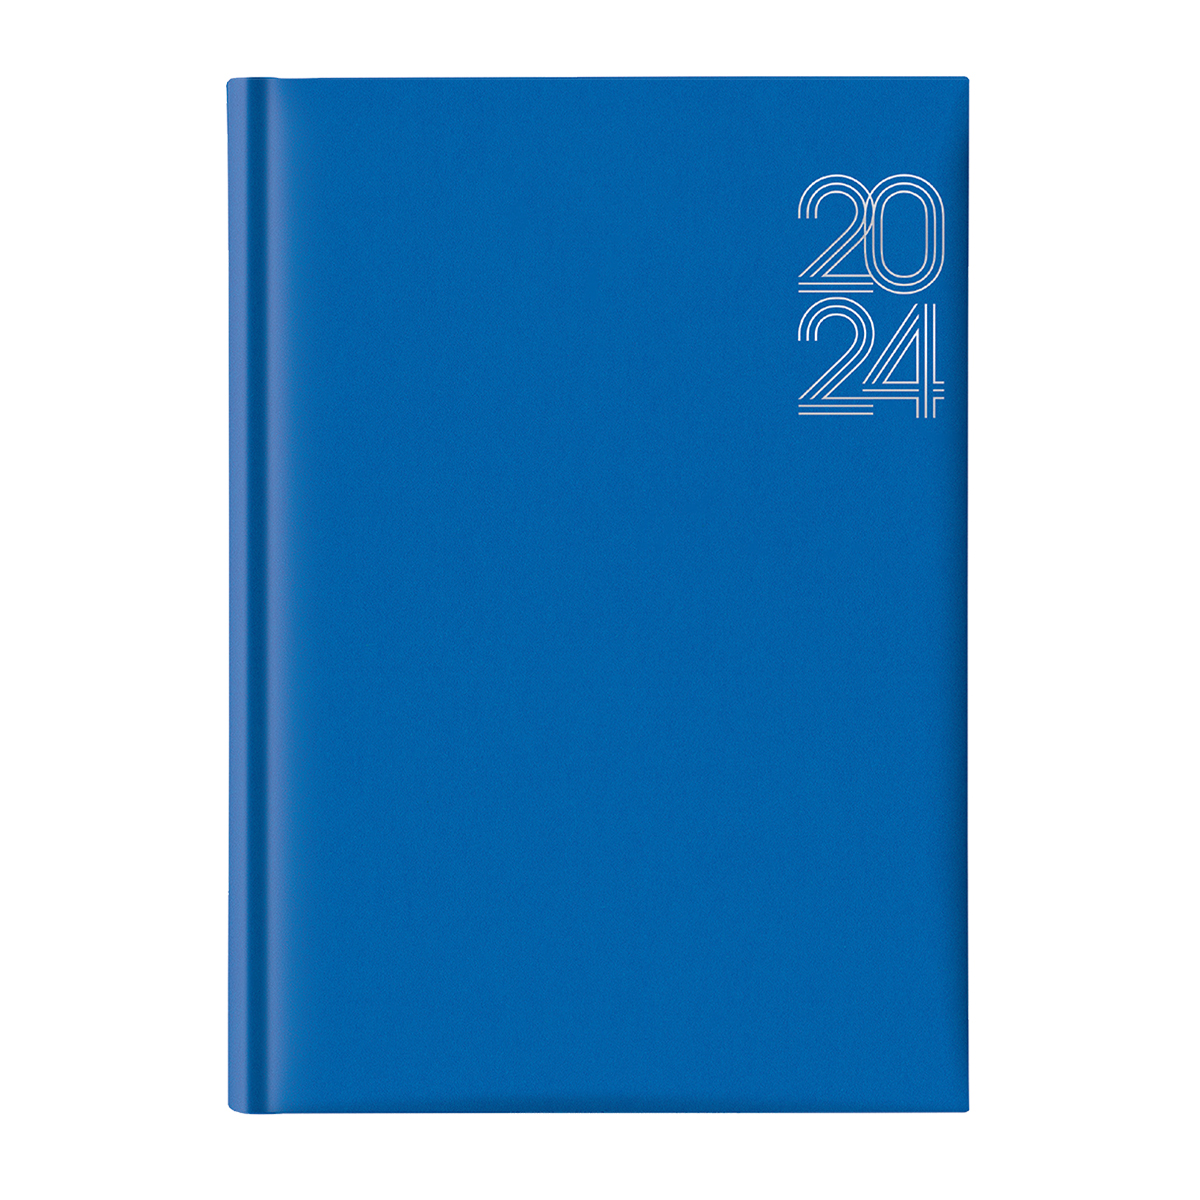 Agenda Artibest A5 datata hartie offset alb coperta albastru